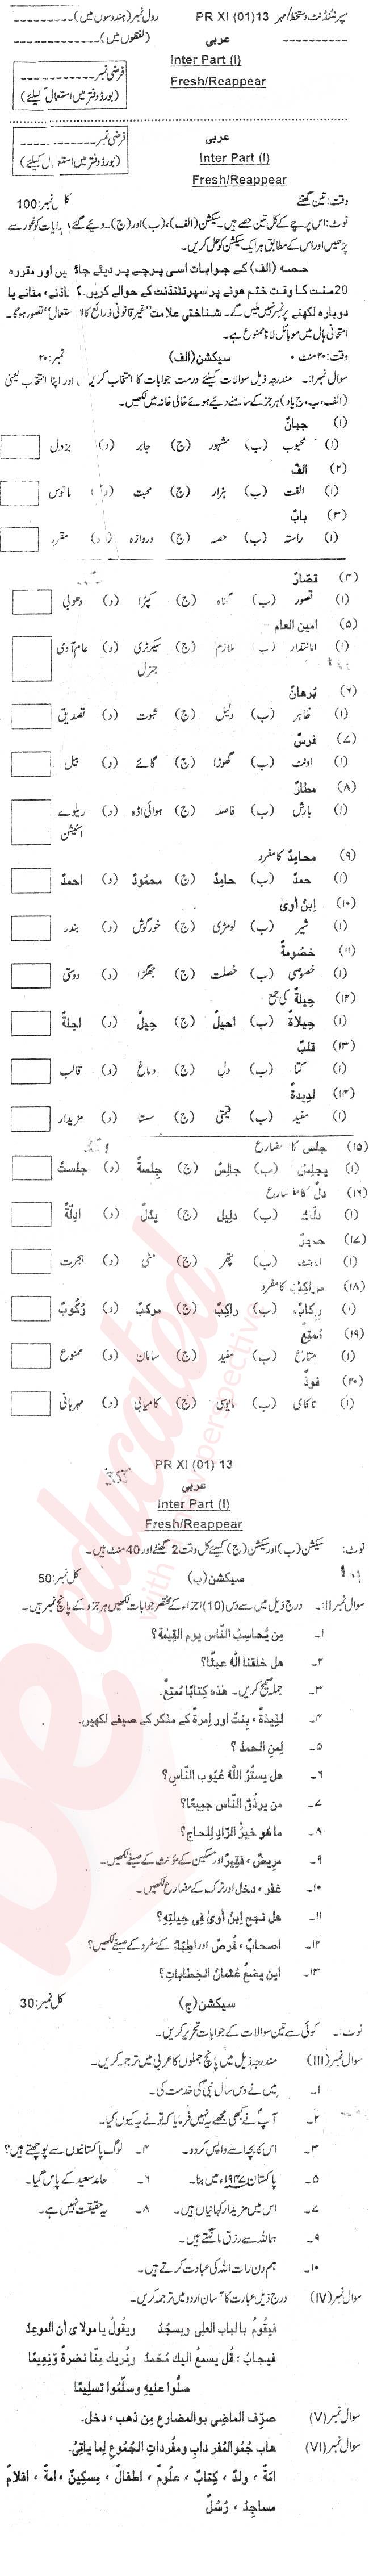 Arabic FA Part 1 Past Paper Group 1 BISE Peshawar 2014